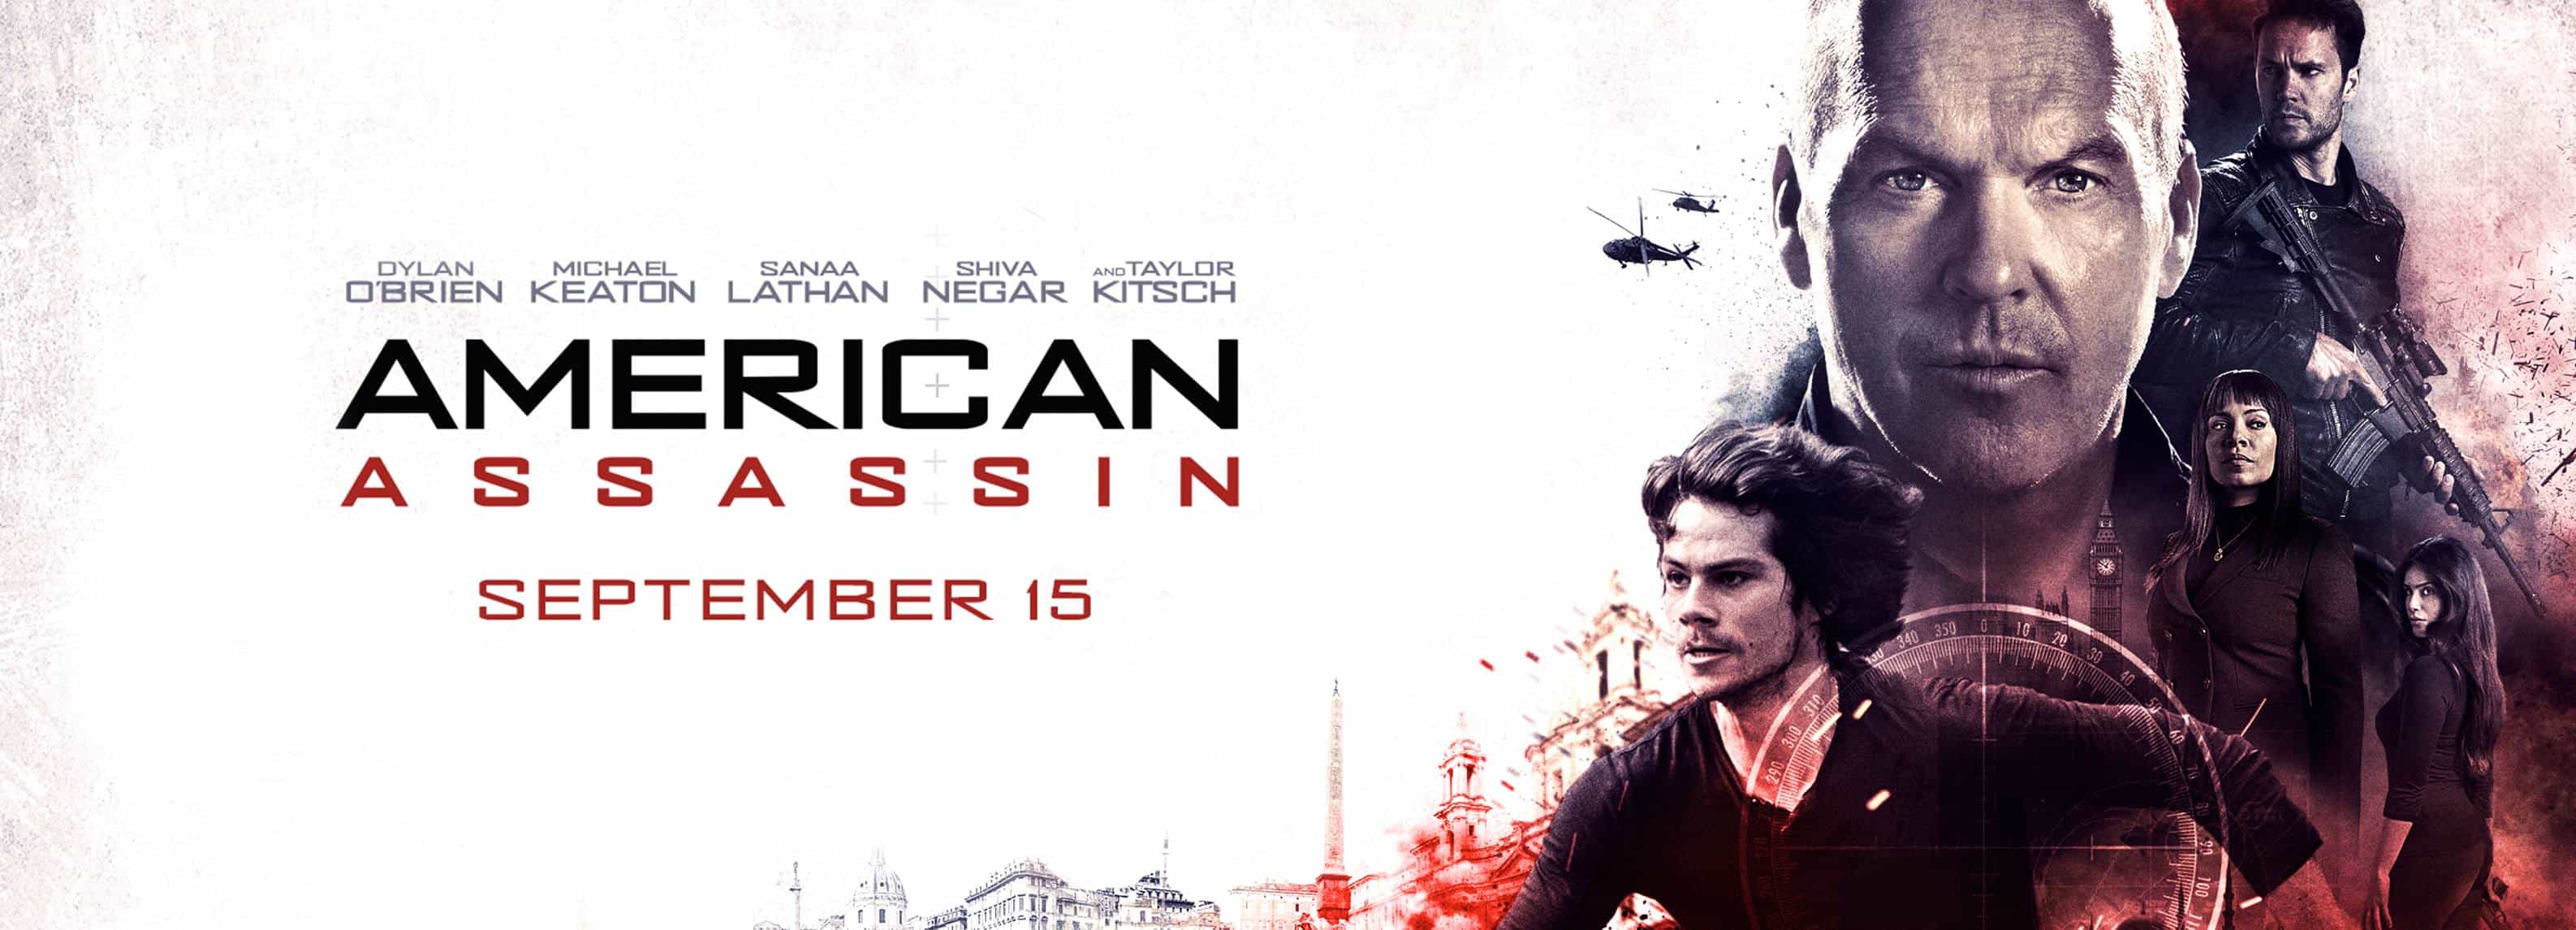 American Assassin 4K 2017 big poster